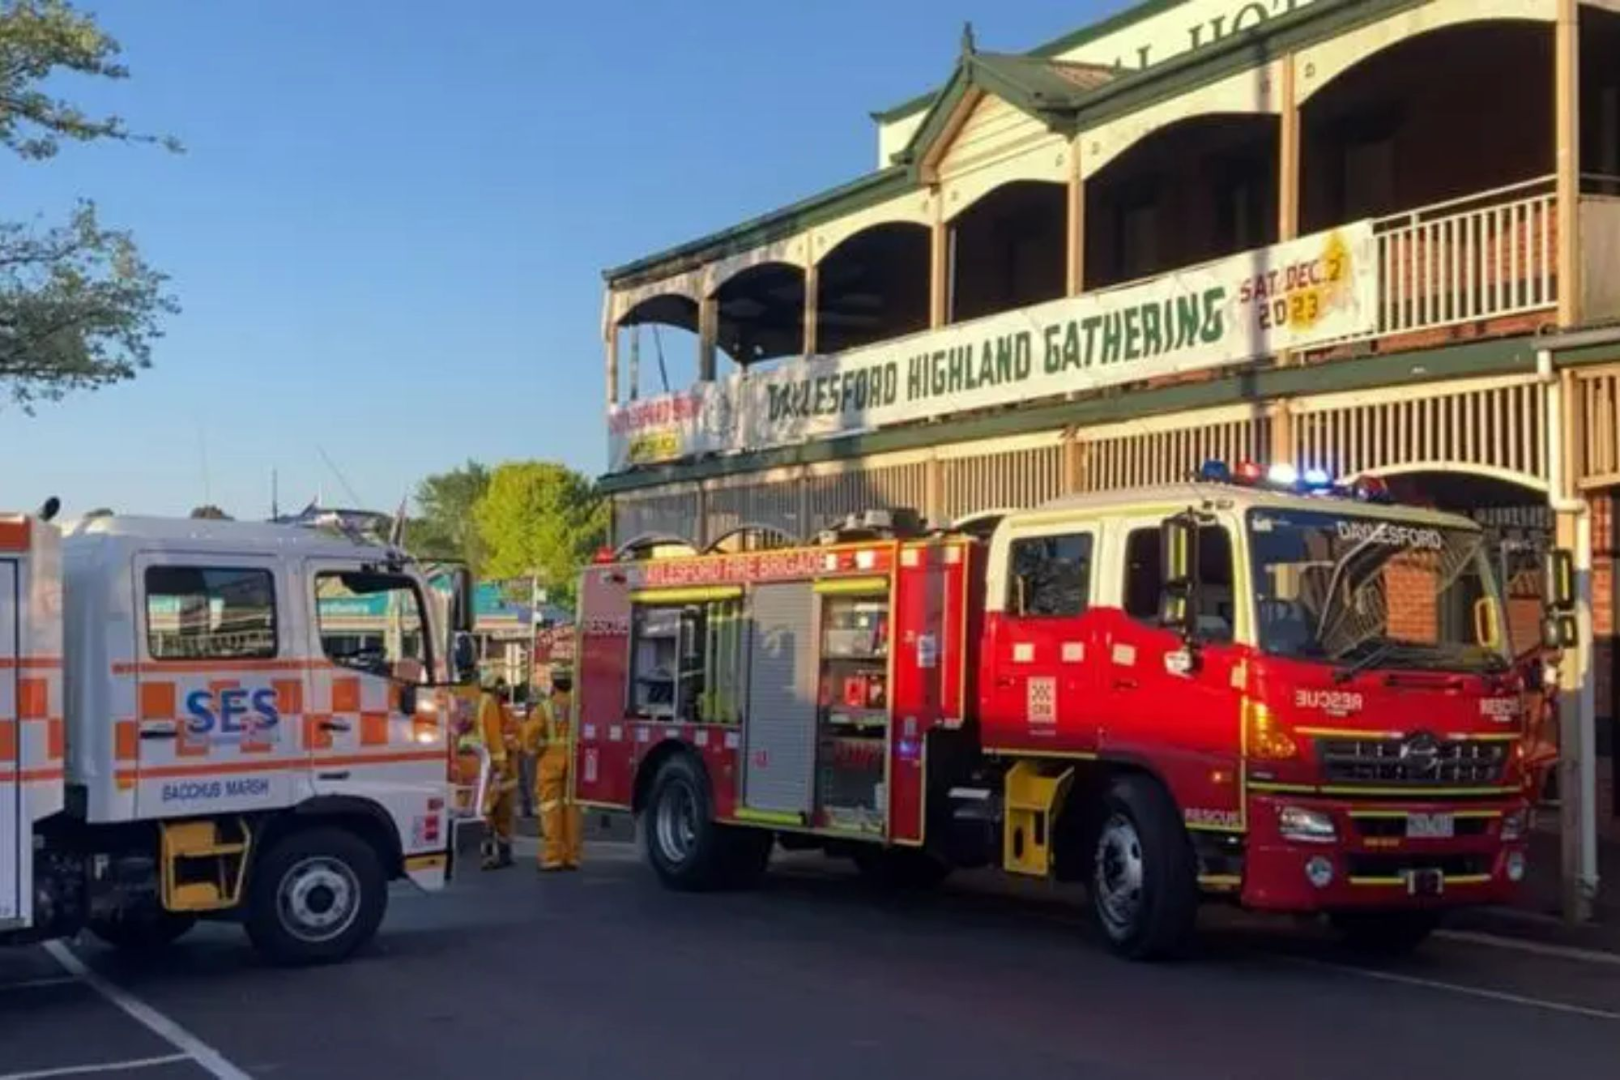 5 Killed As Car Crashes Into Pub’s Dining Area In Australia